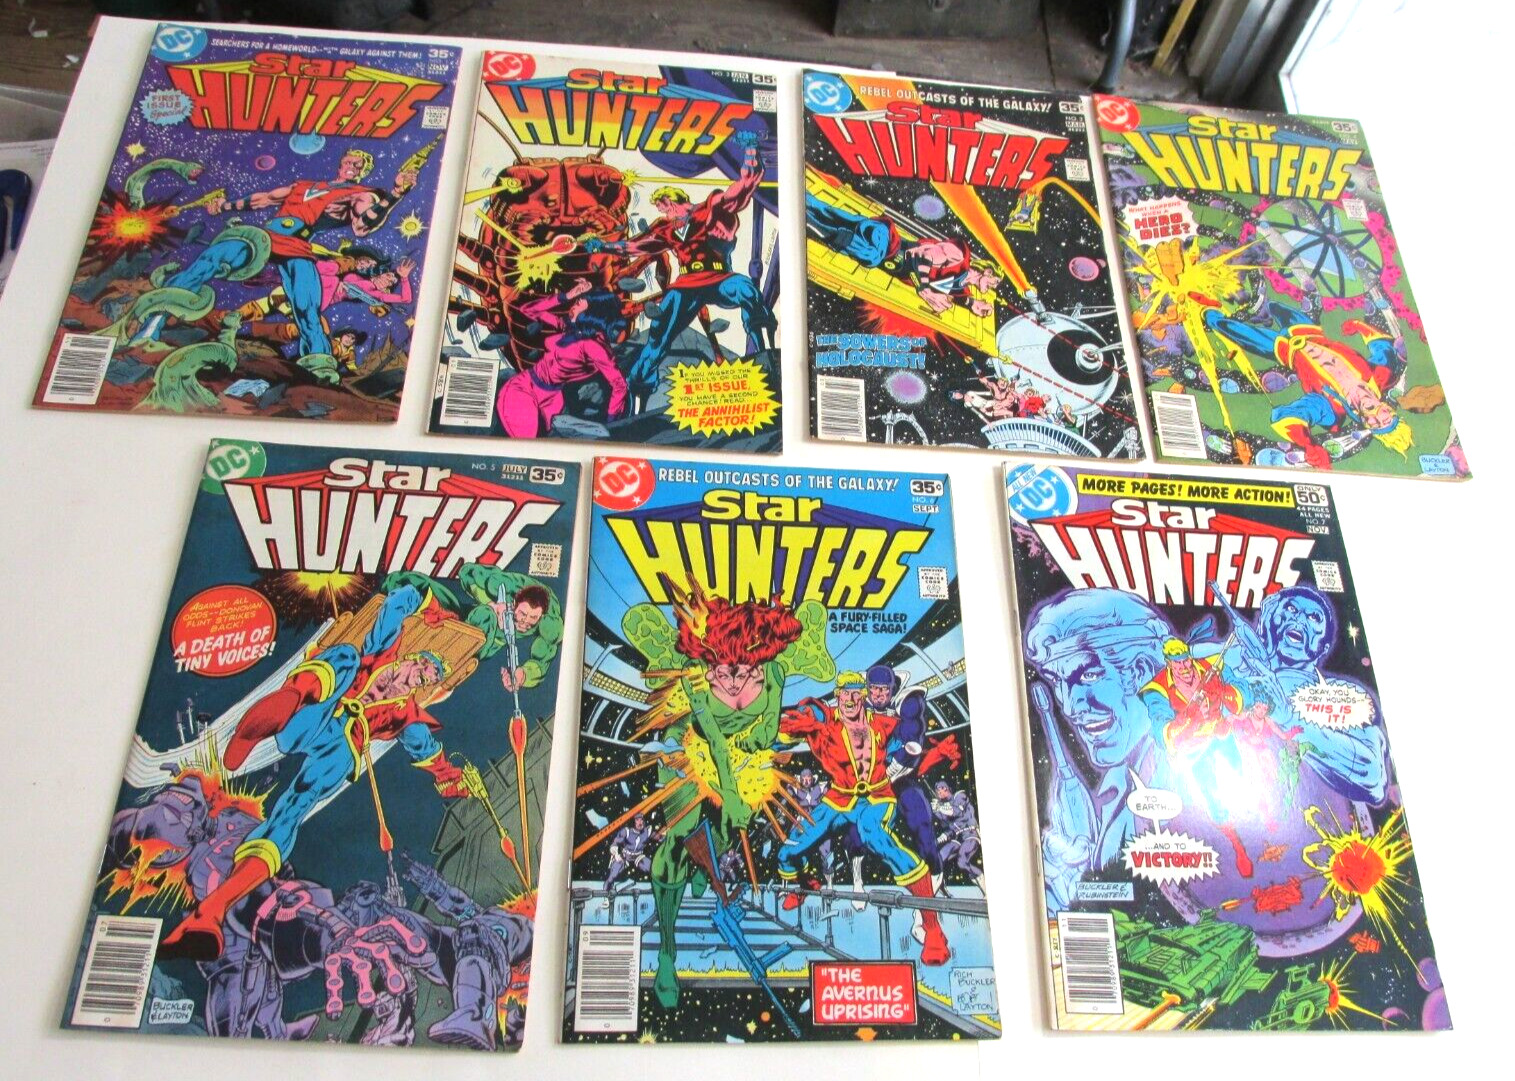 7-STAR HUNTERS COMICS #1-#7 DC Comics Science Fiction Space Comic, 1977-1978